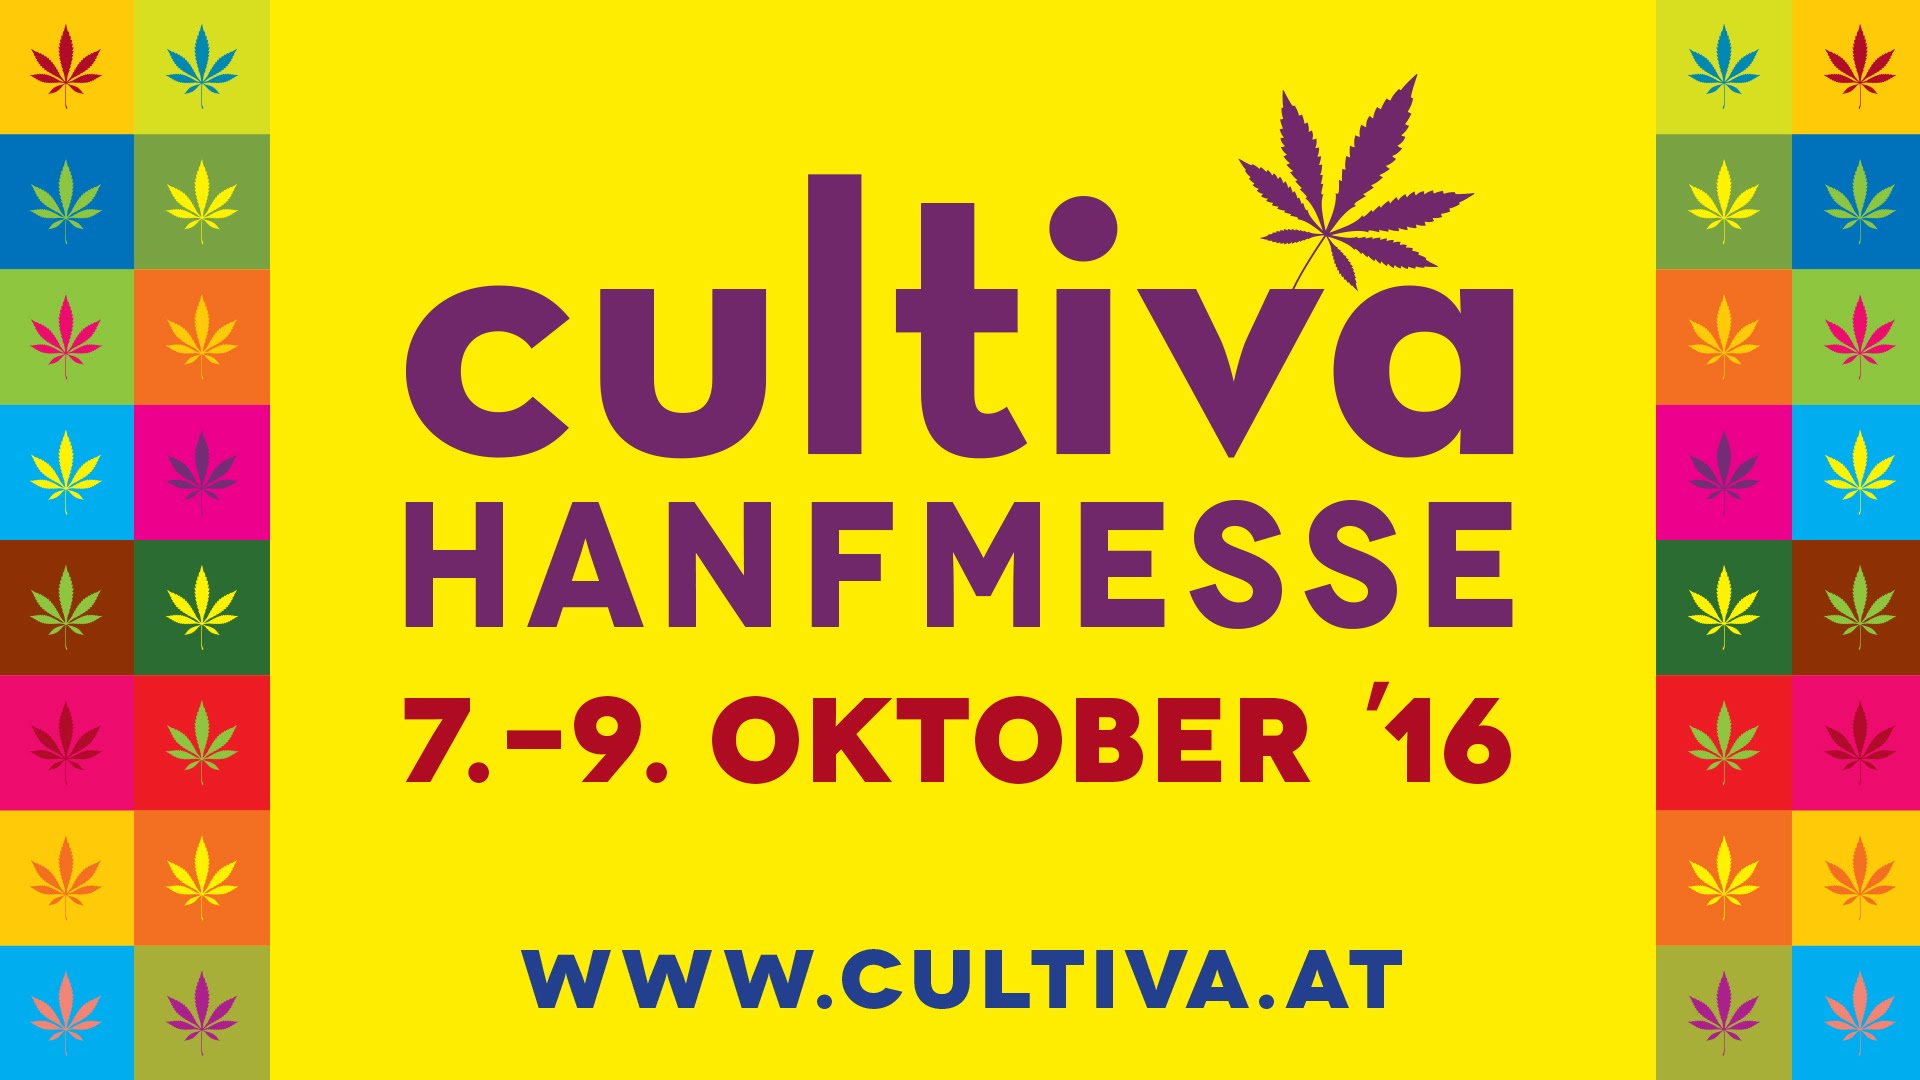 Todo sobre la Cultiva Hanfmesse 2016